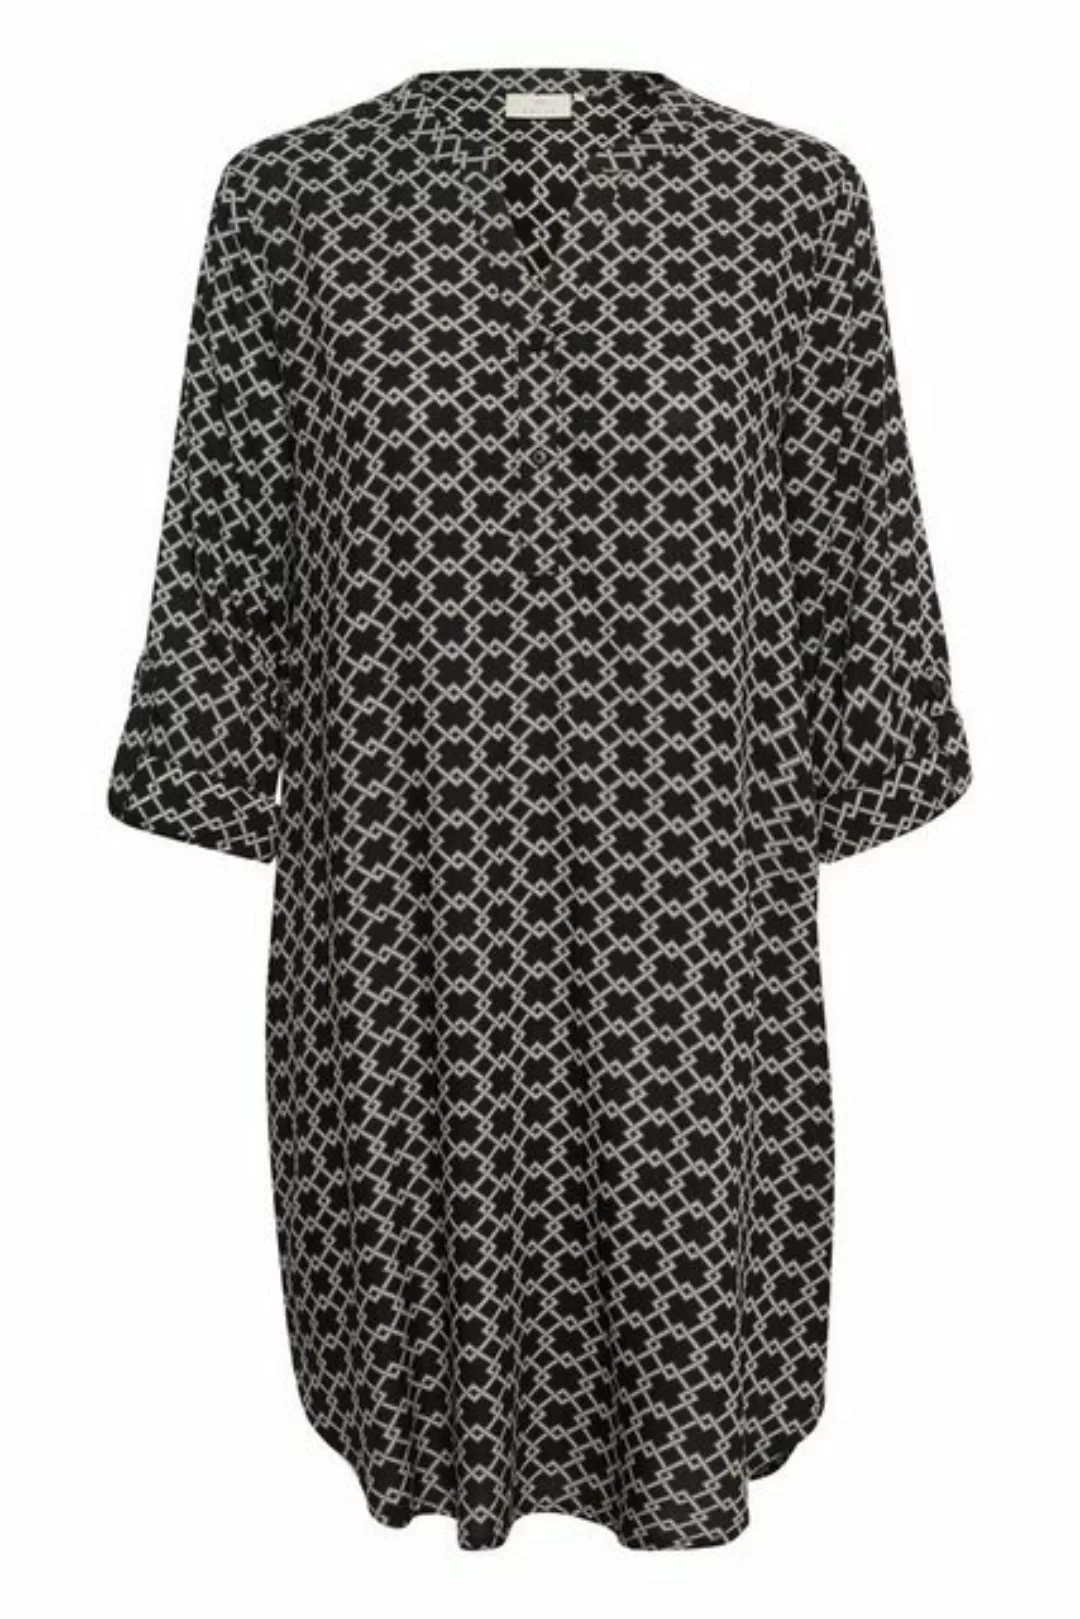 KAFFE Jerseykleid Kleid KAmarana günstig online kaufen